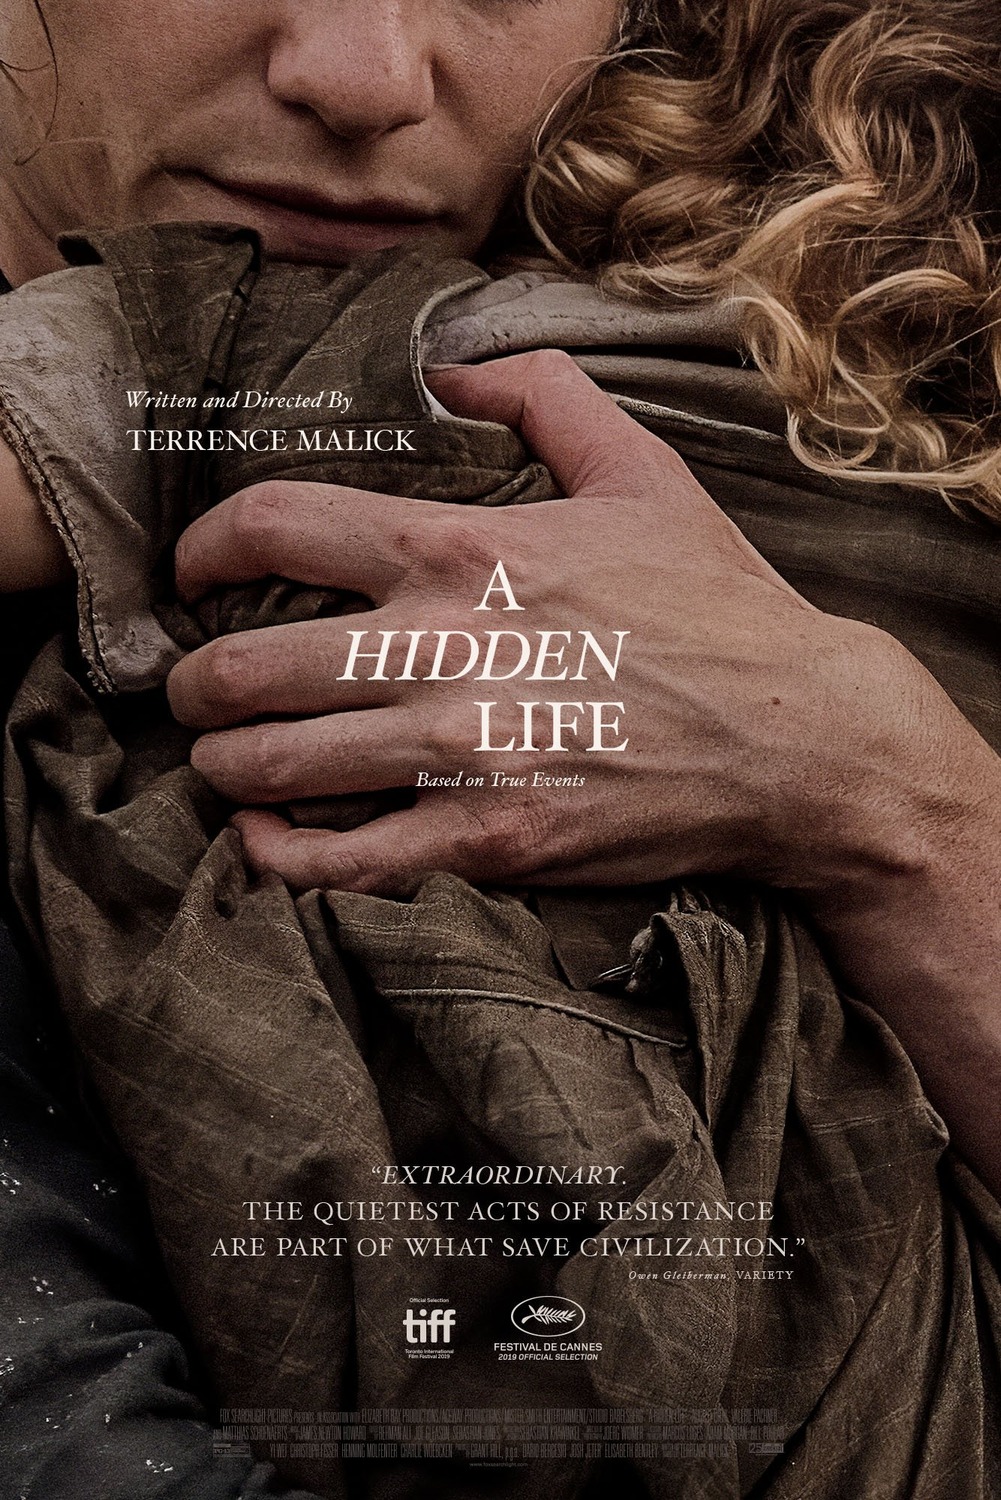 Nonton film A Hidden Life layarkaca21 indoxx1 ganool online streaming terbaru